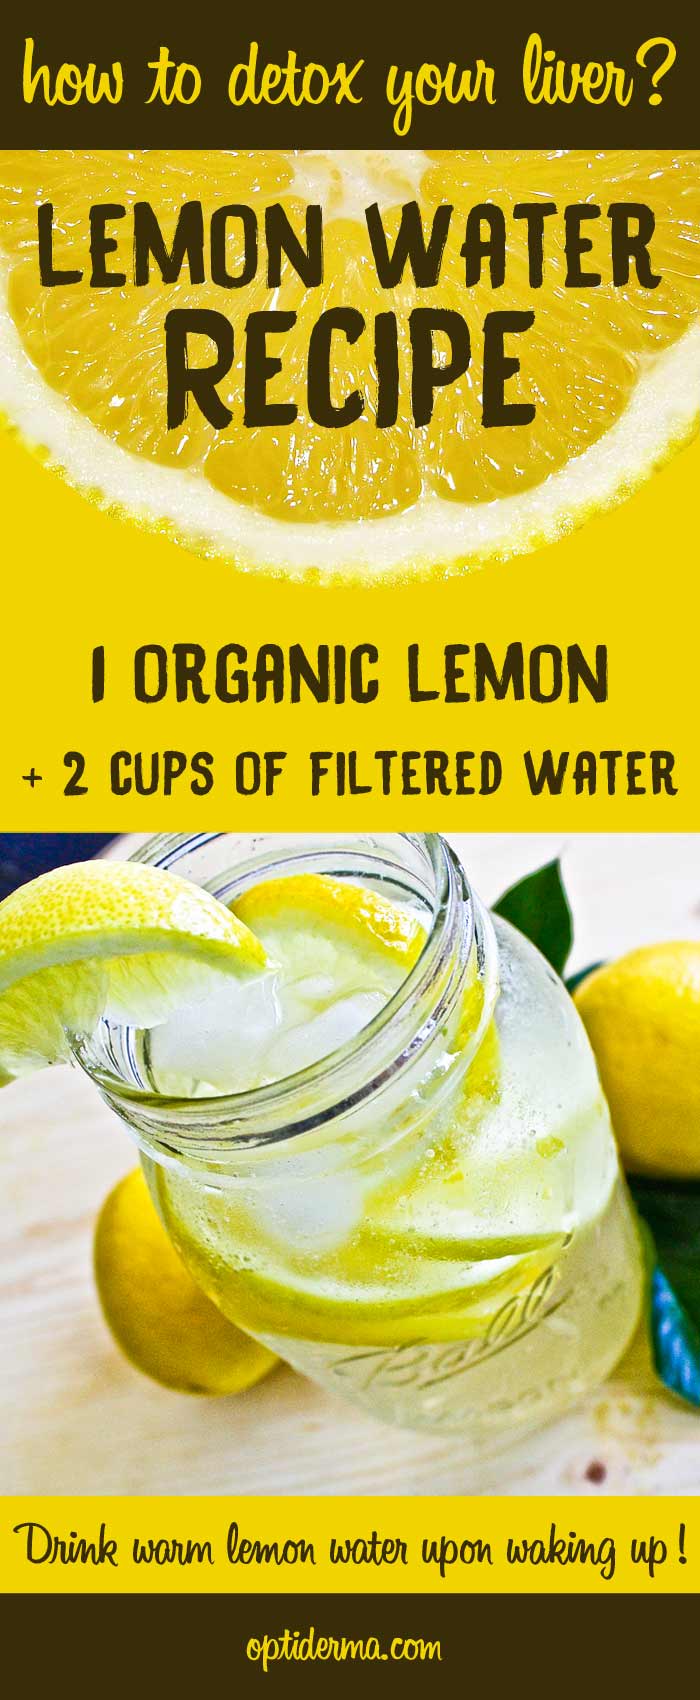 Lemon water recipe to detox liver